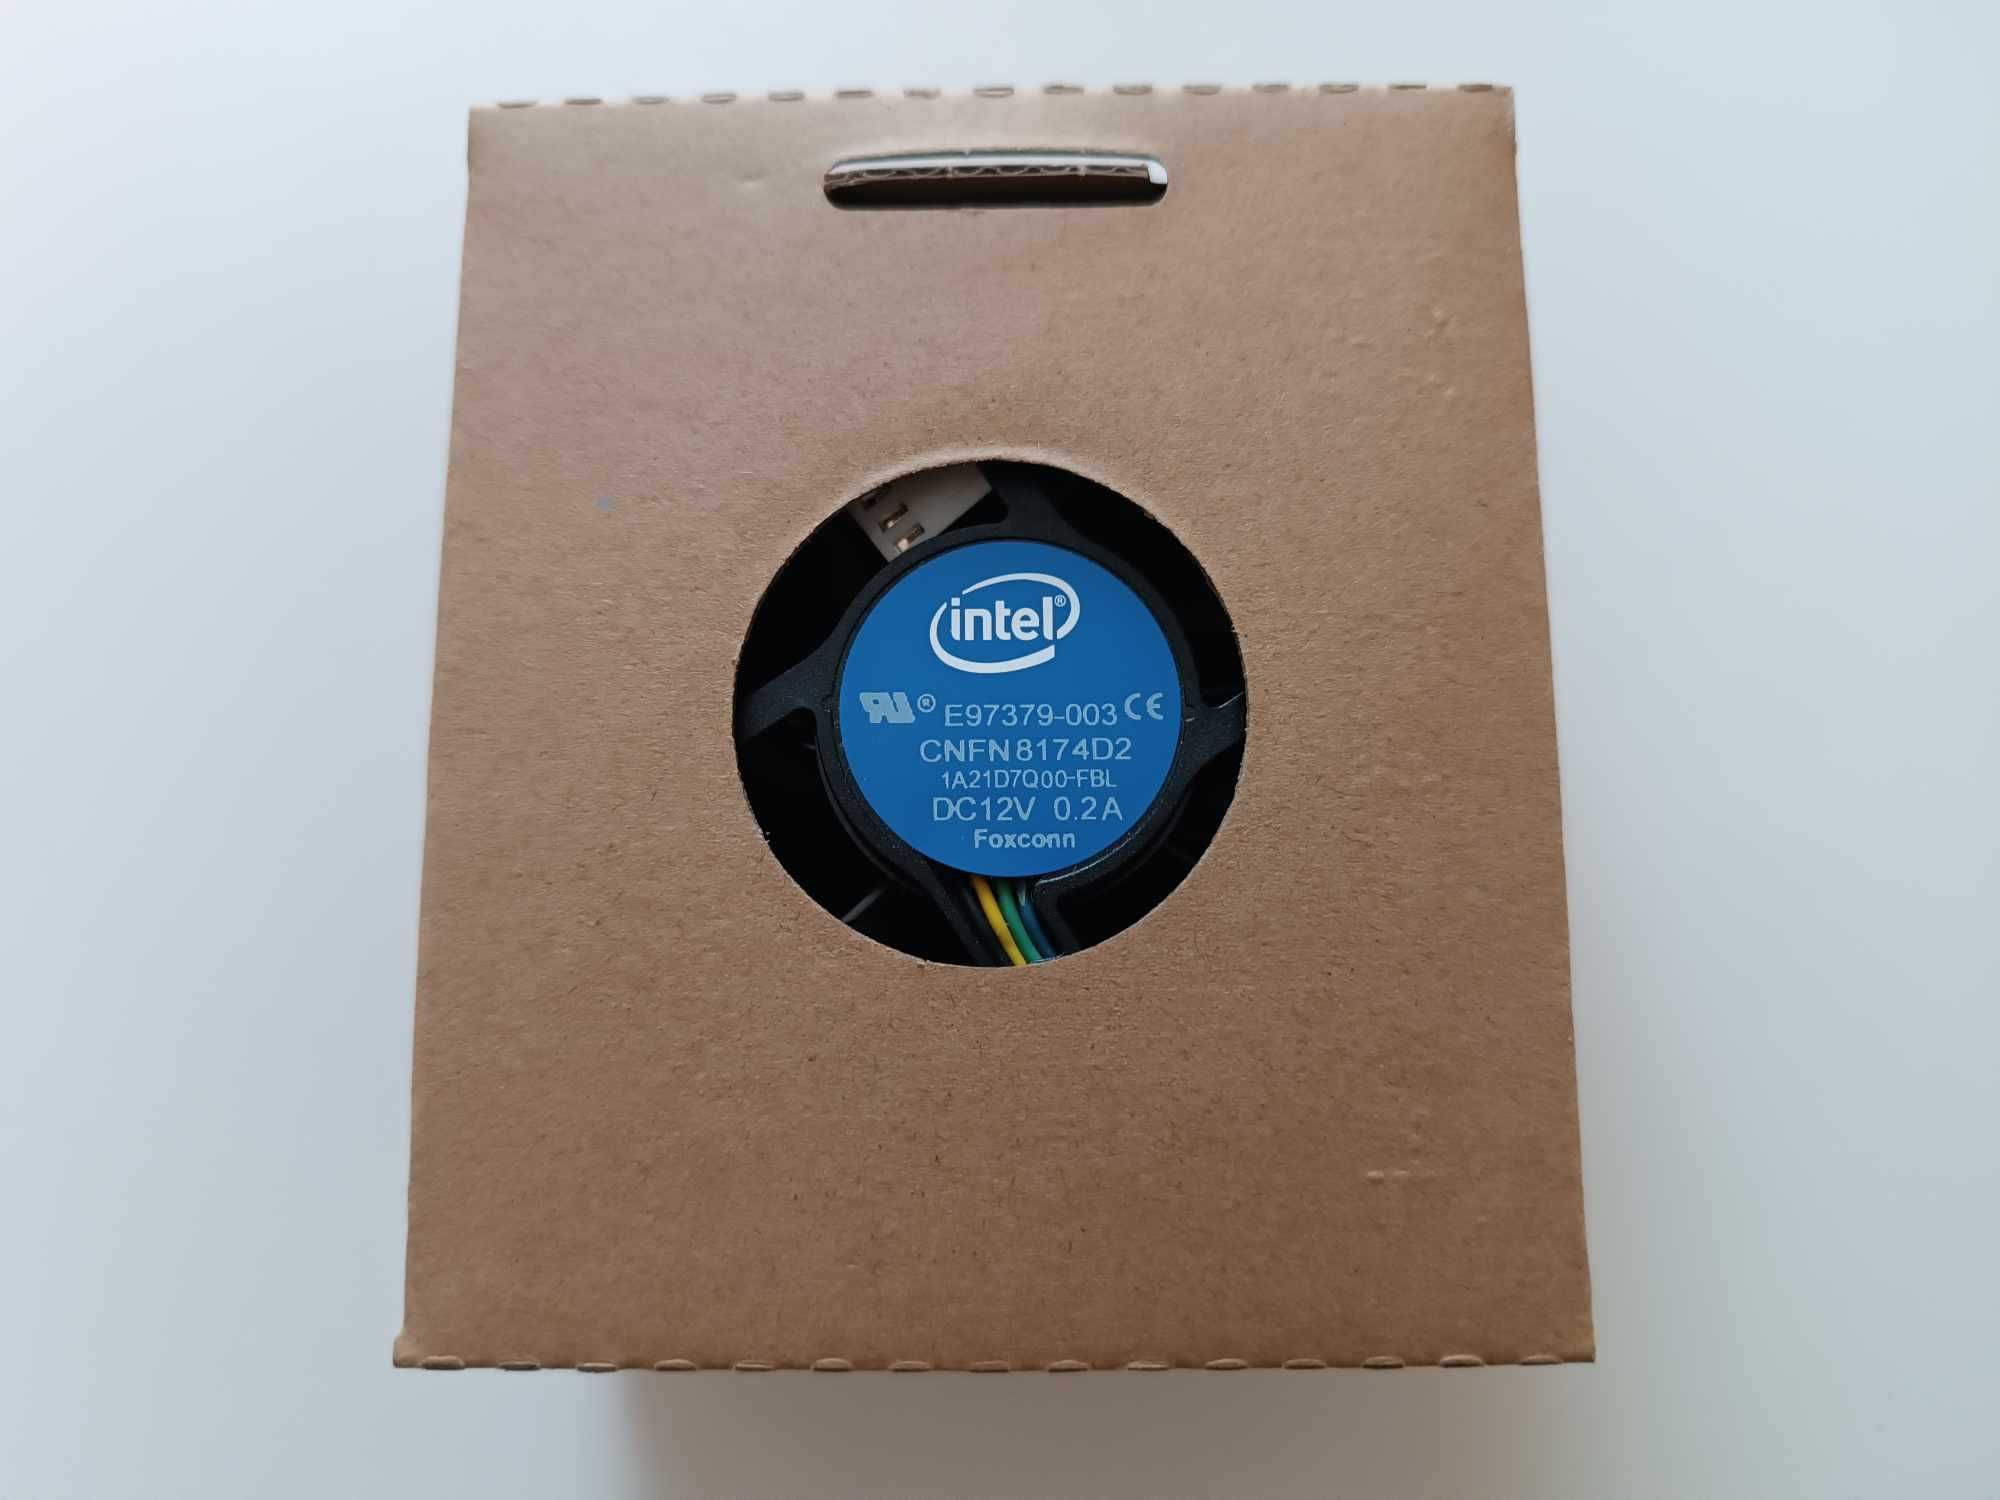 Intel i3/i5/i7 LGA115x CPU Heatsink and Fan E97379-003